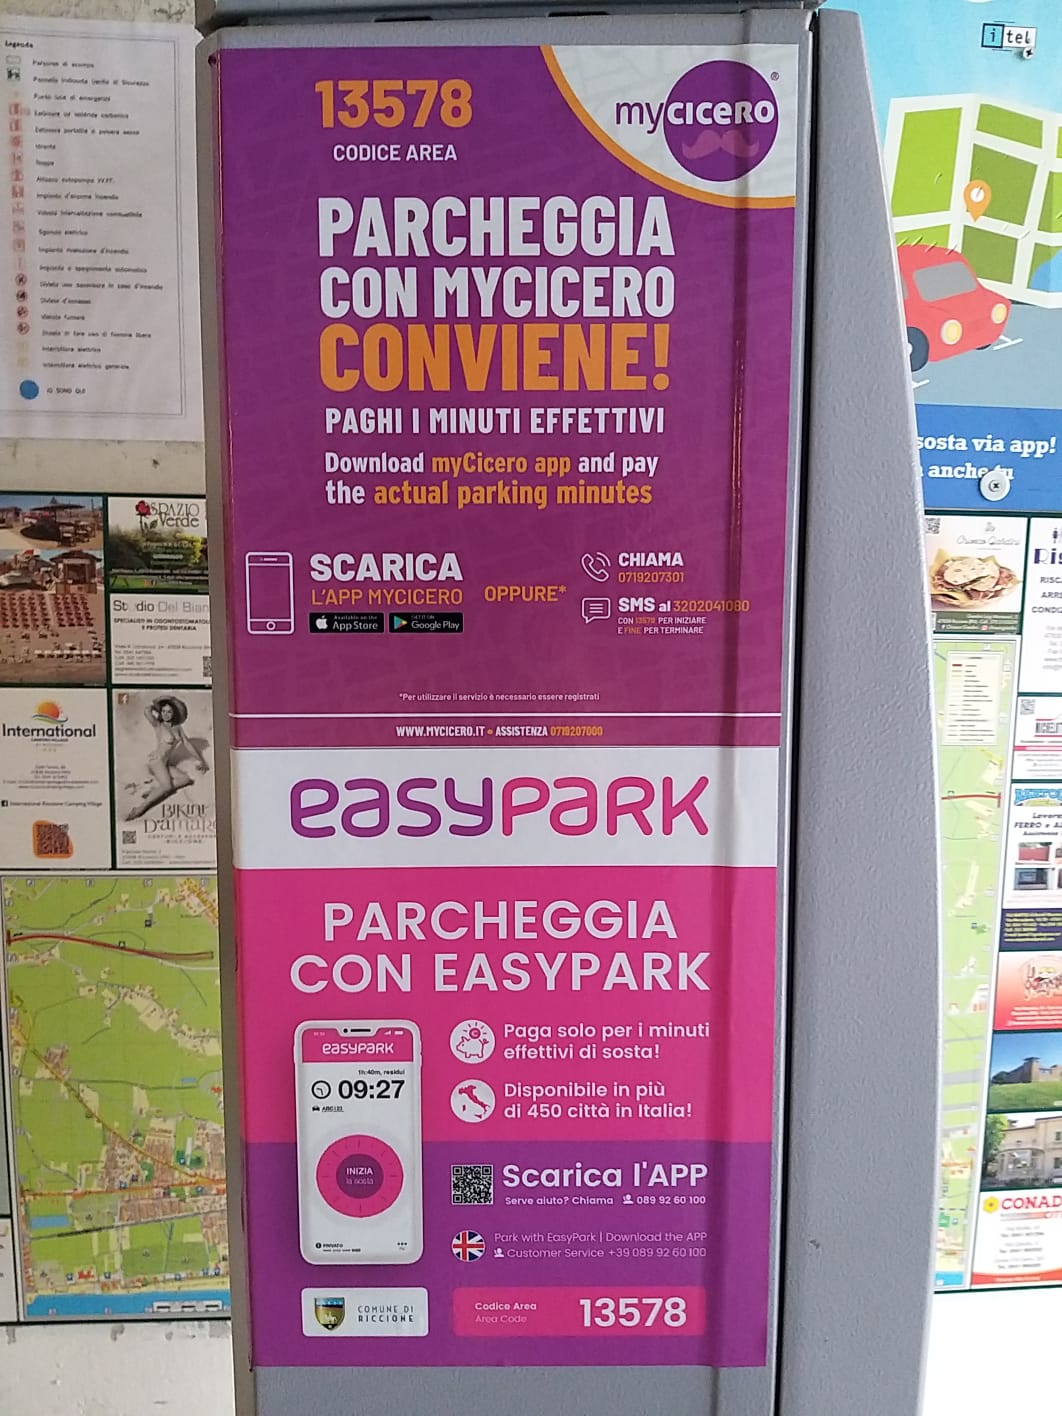 EasyPark e MyCicero app per parcheggiare